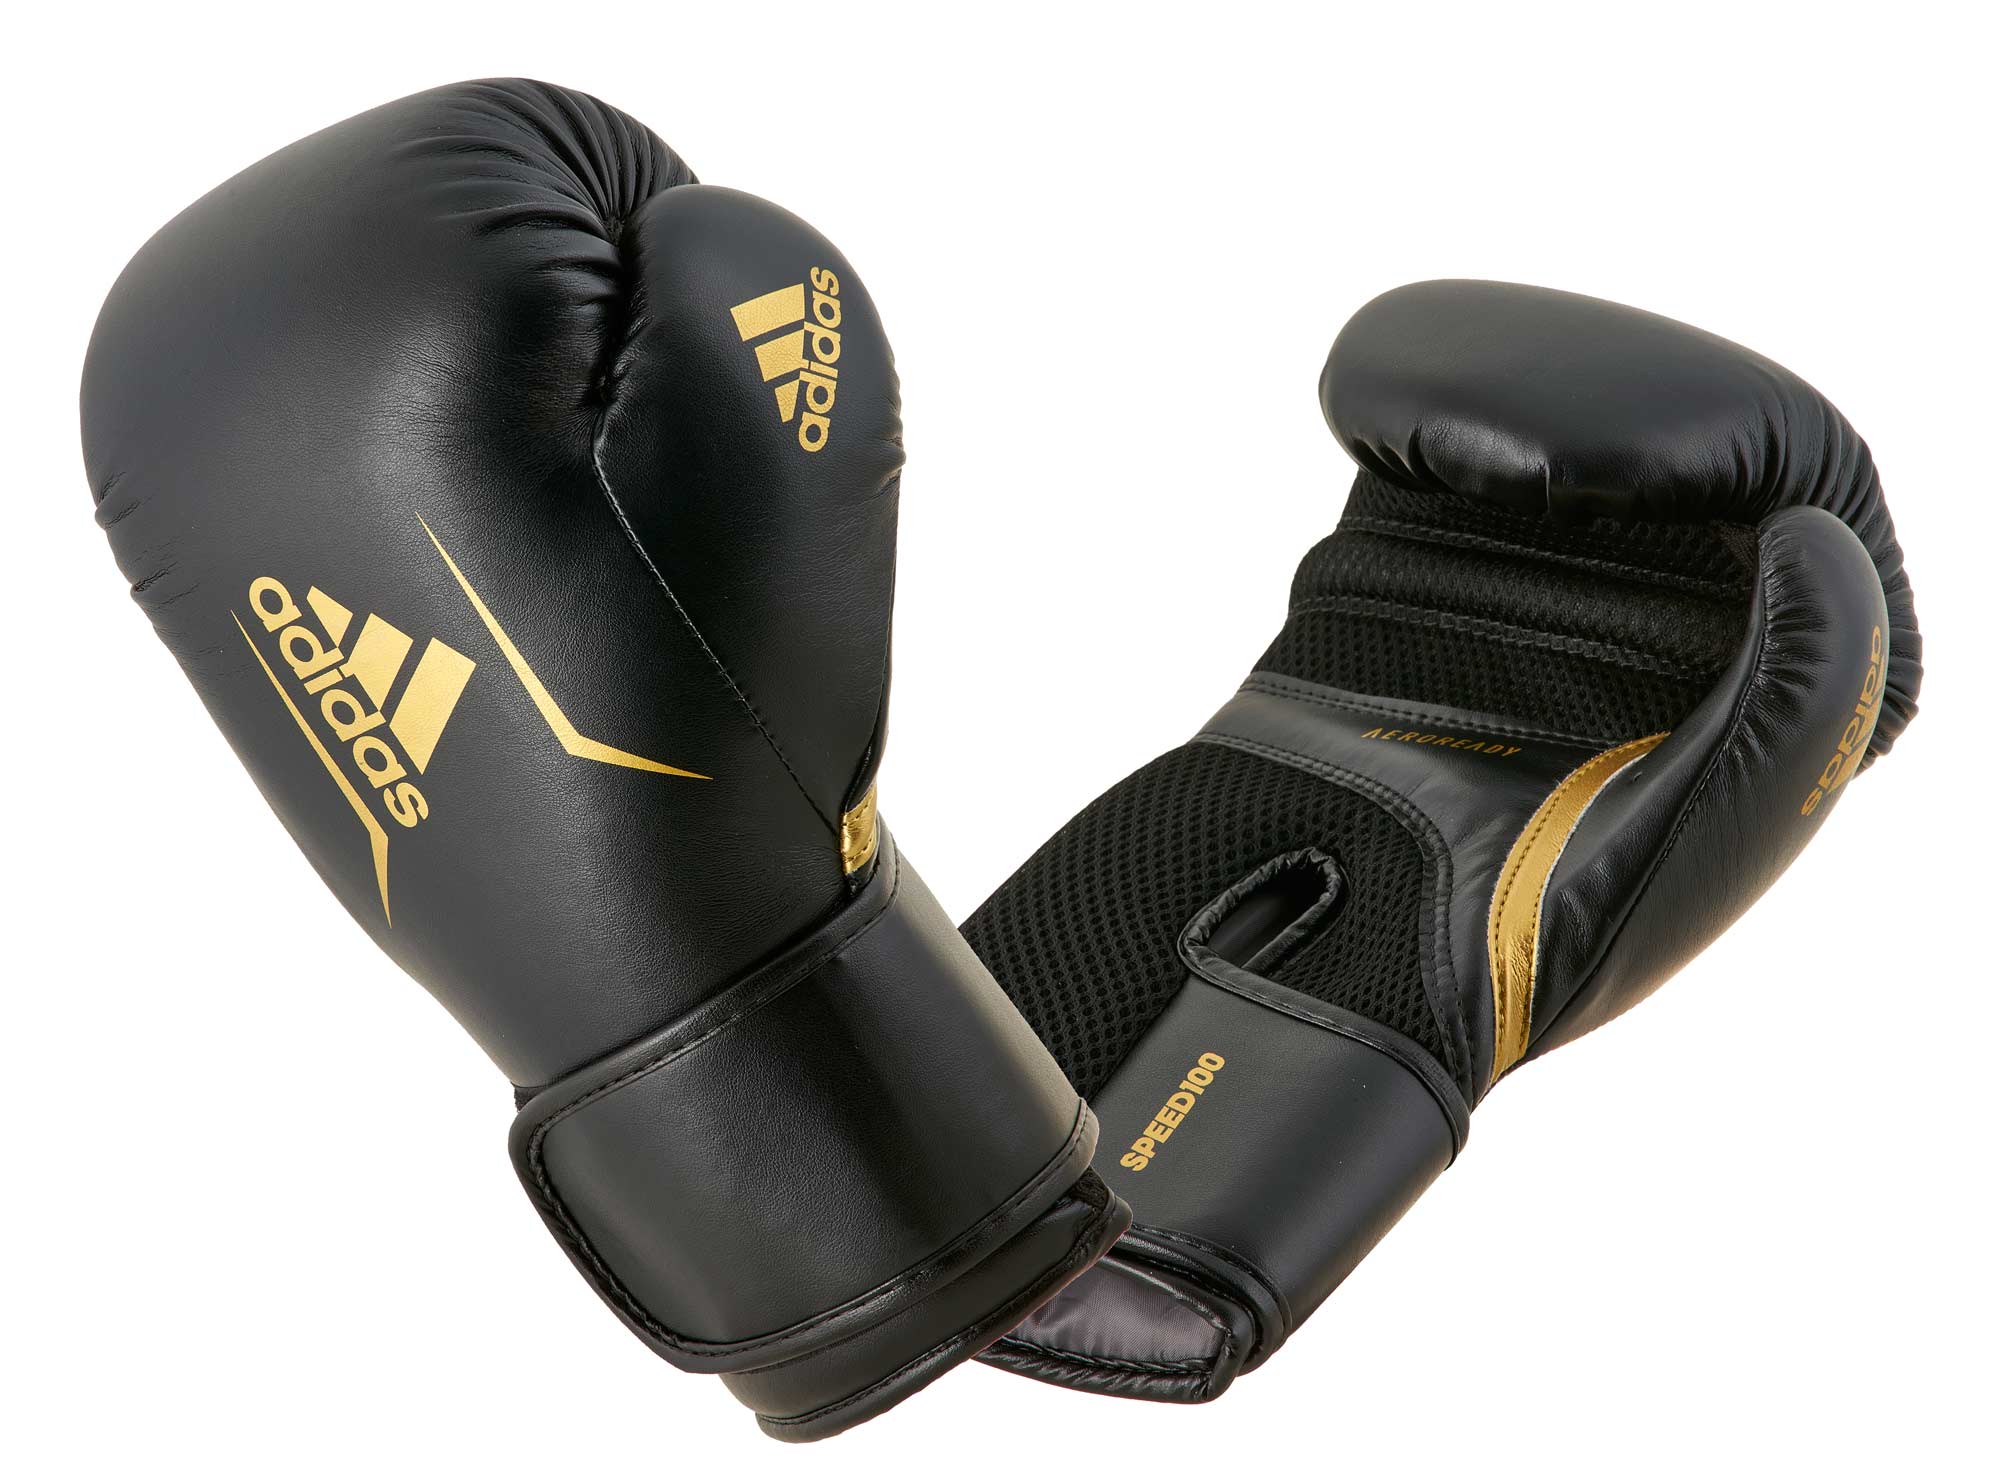 adidas boxing glove Speed 100 ADISBG100, black/gold